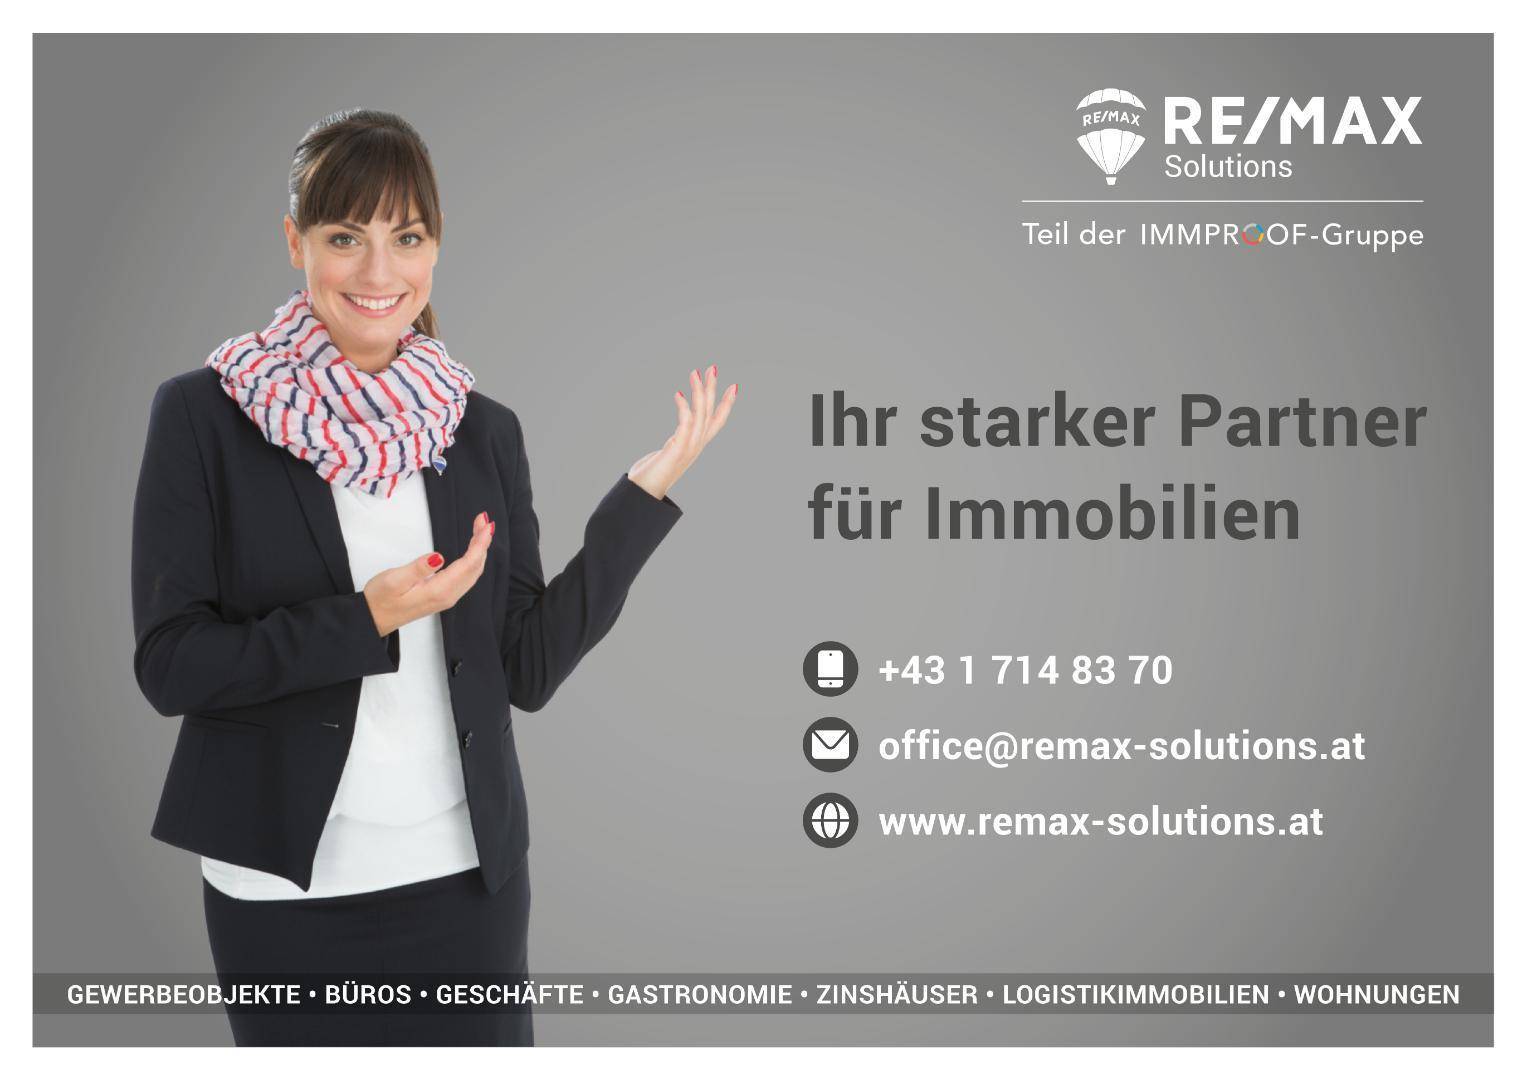 #remaxsolutions